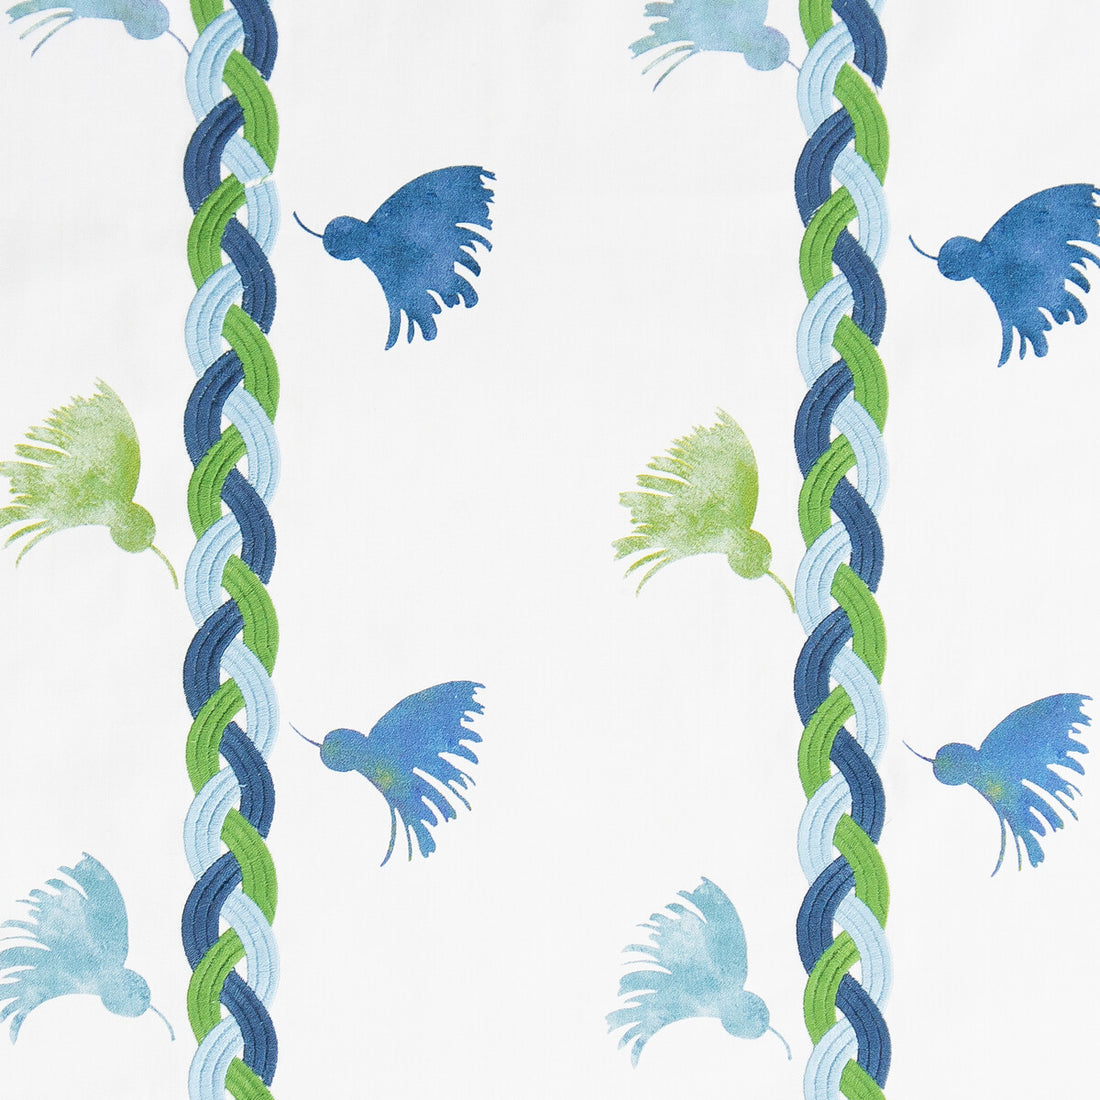 Reina Roja fabric in verde/azul color - pattern GDT5603.003.0 - by Gaston y Daniela in the Gaston Nuevo Mundo collection